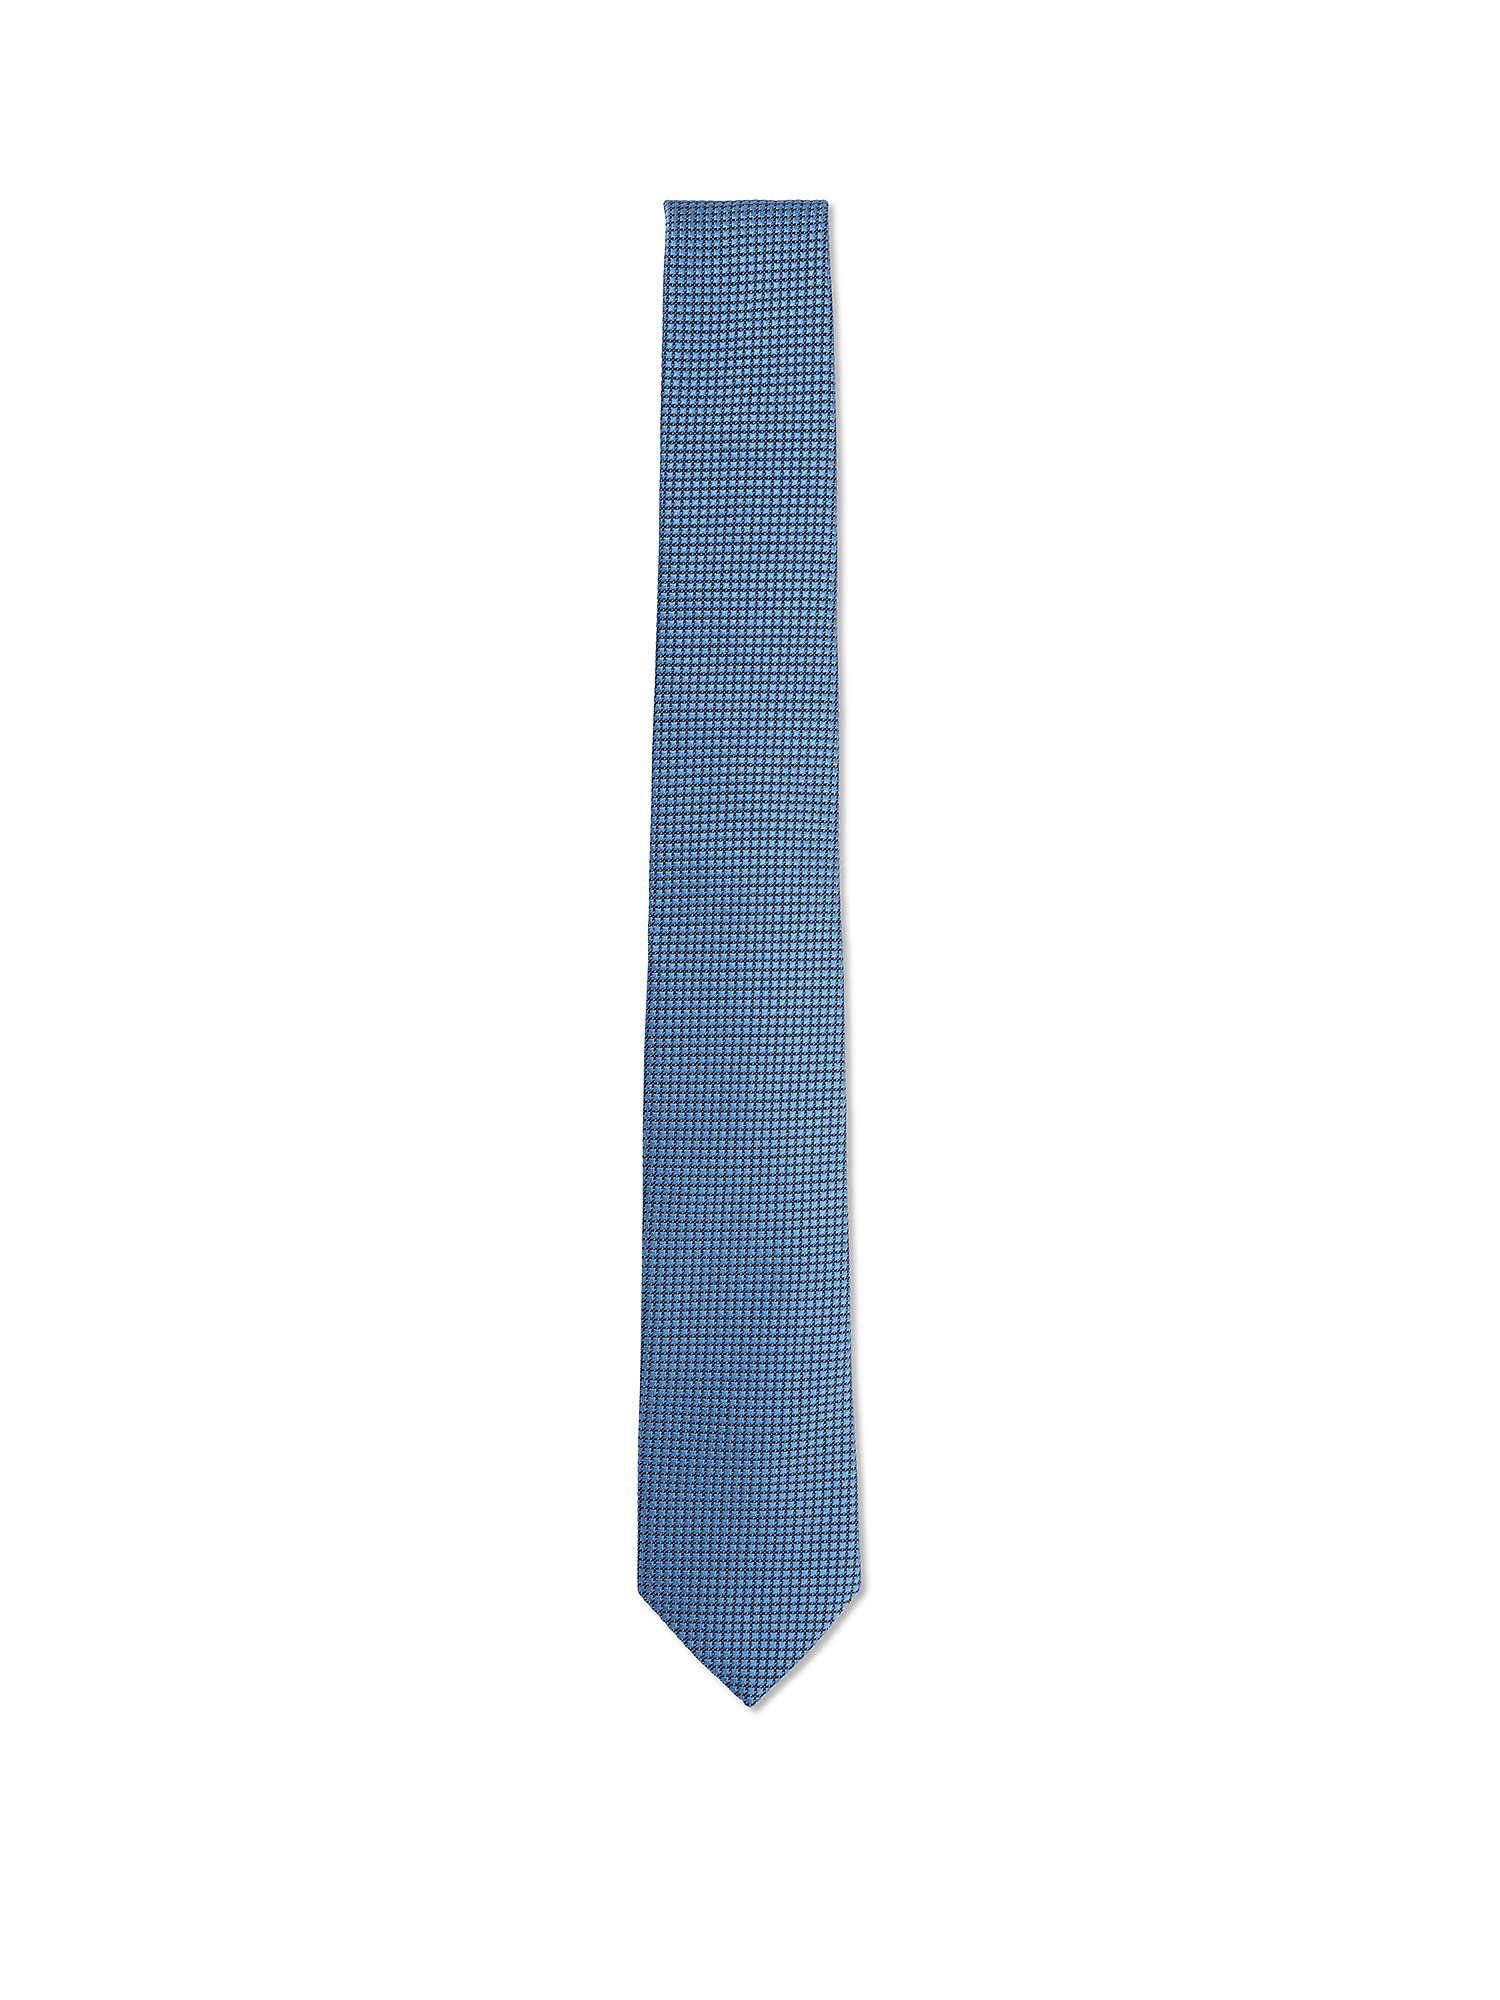 Cravatta in pura seta tinta unita, Azzurro, large